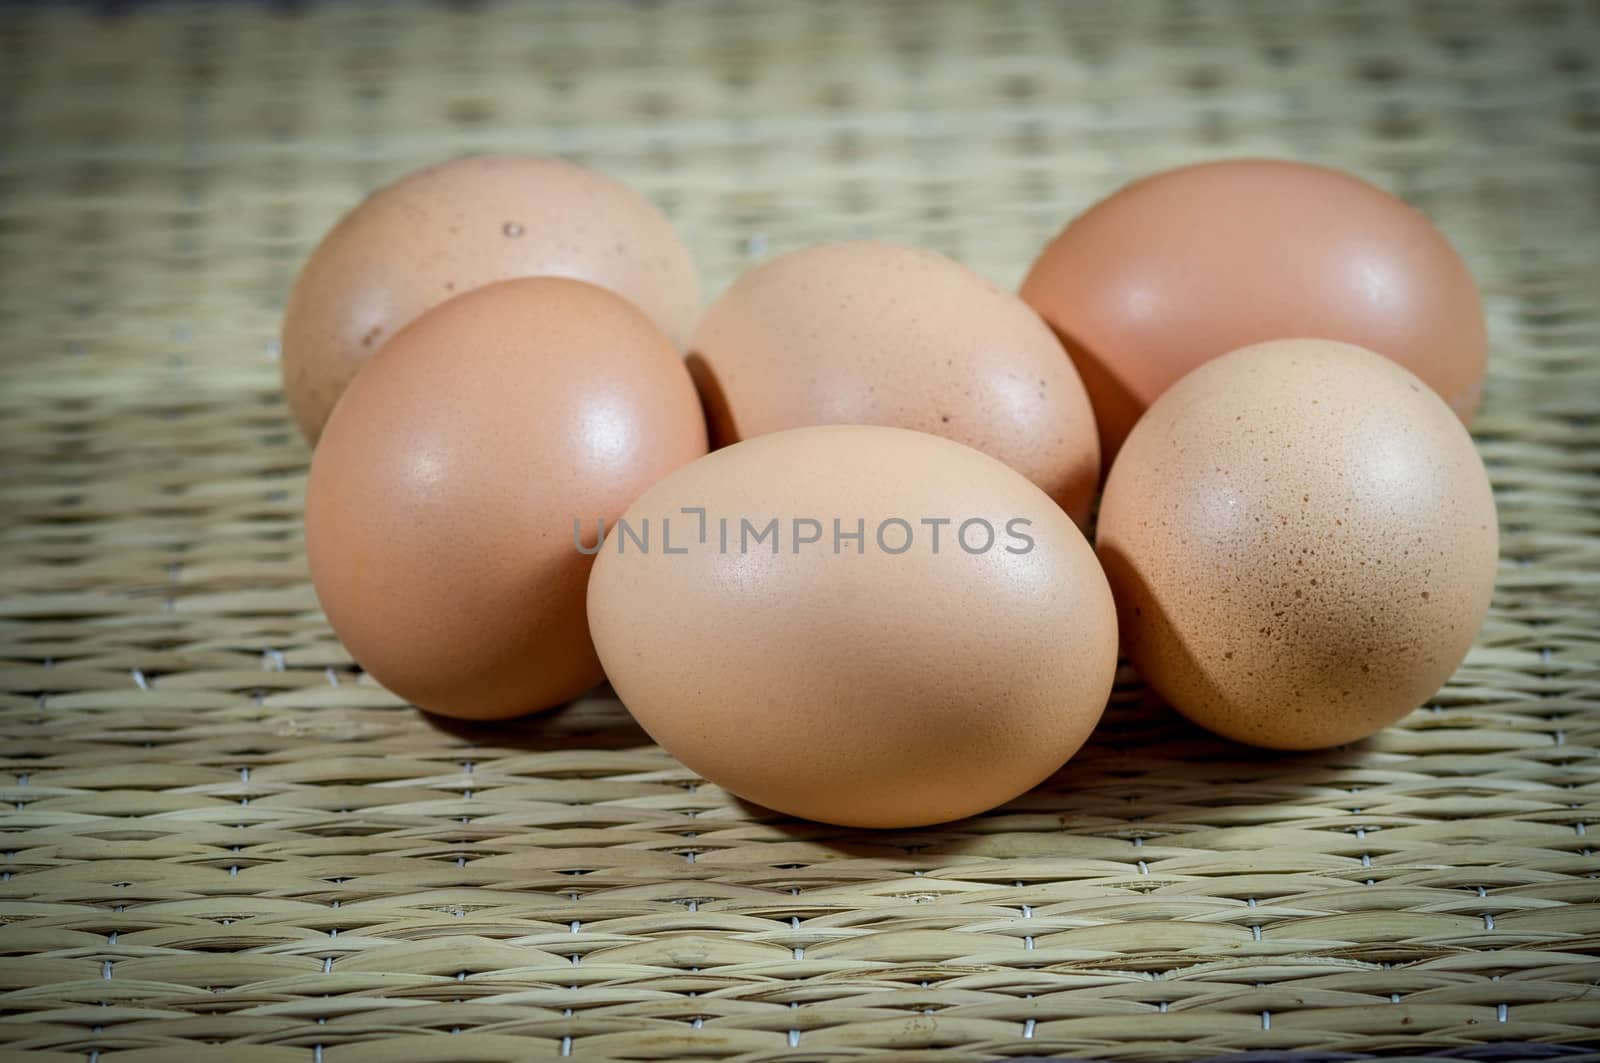 Chicken brown eggs on wood.